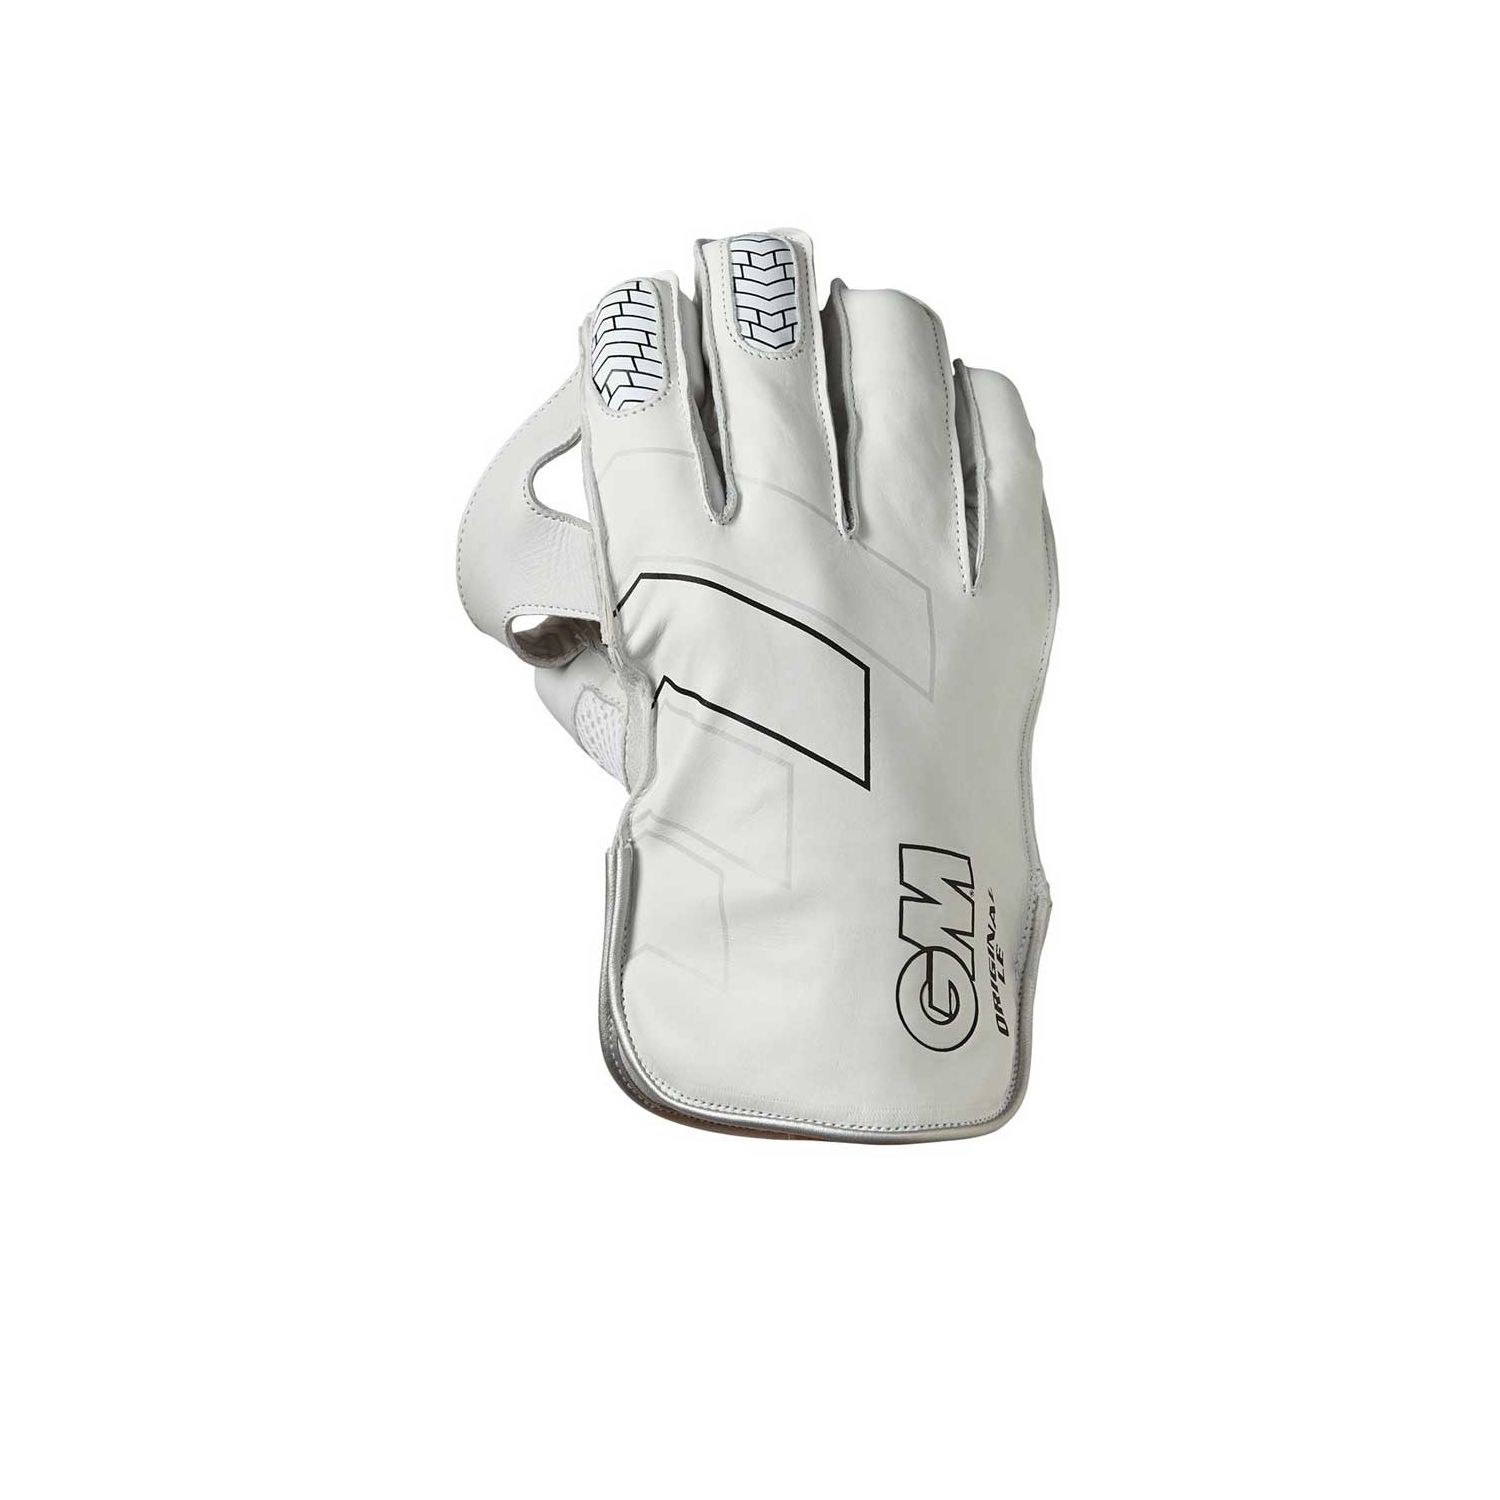 Original L.E Wicket Keeping Gloves